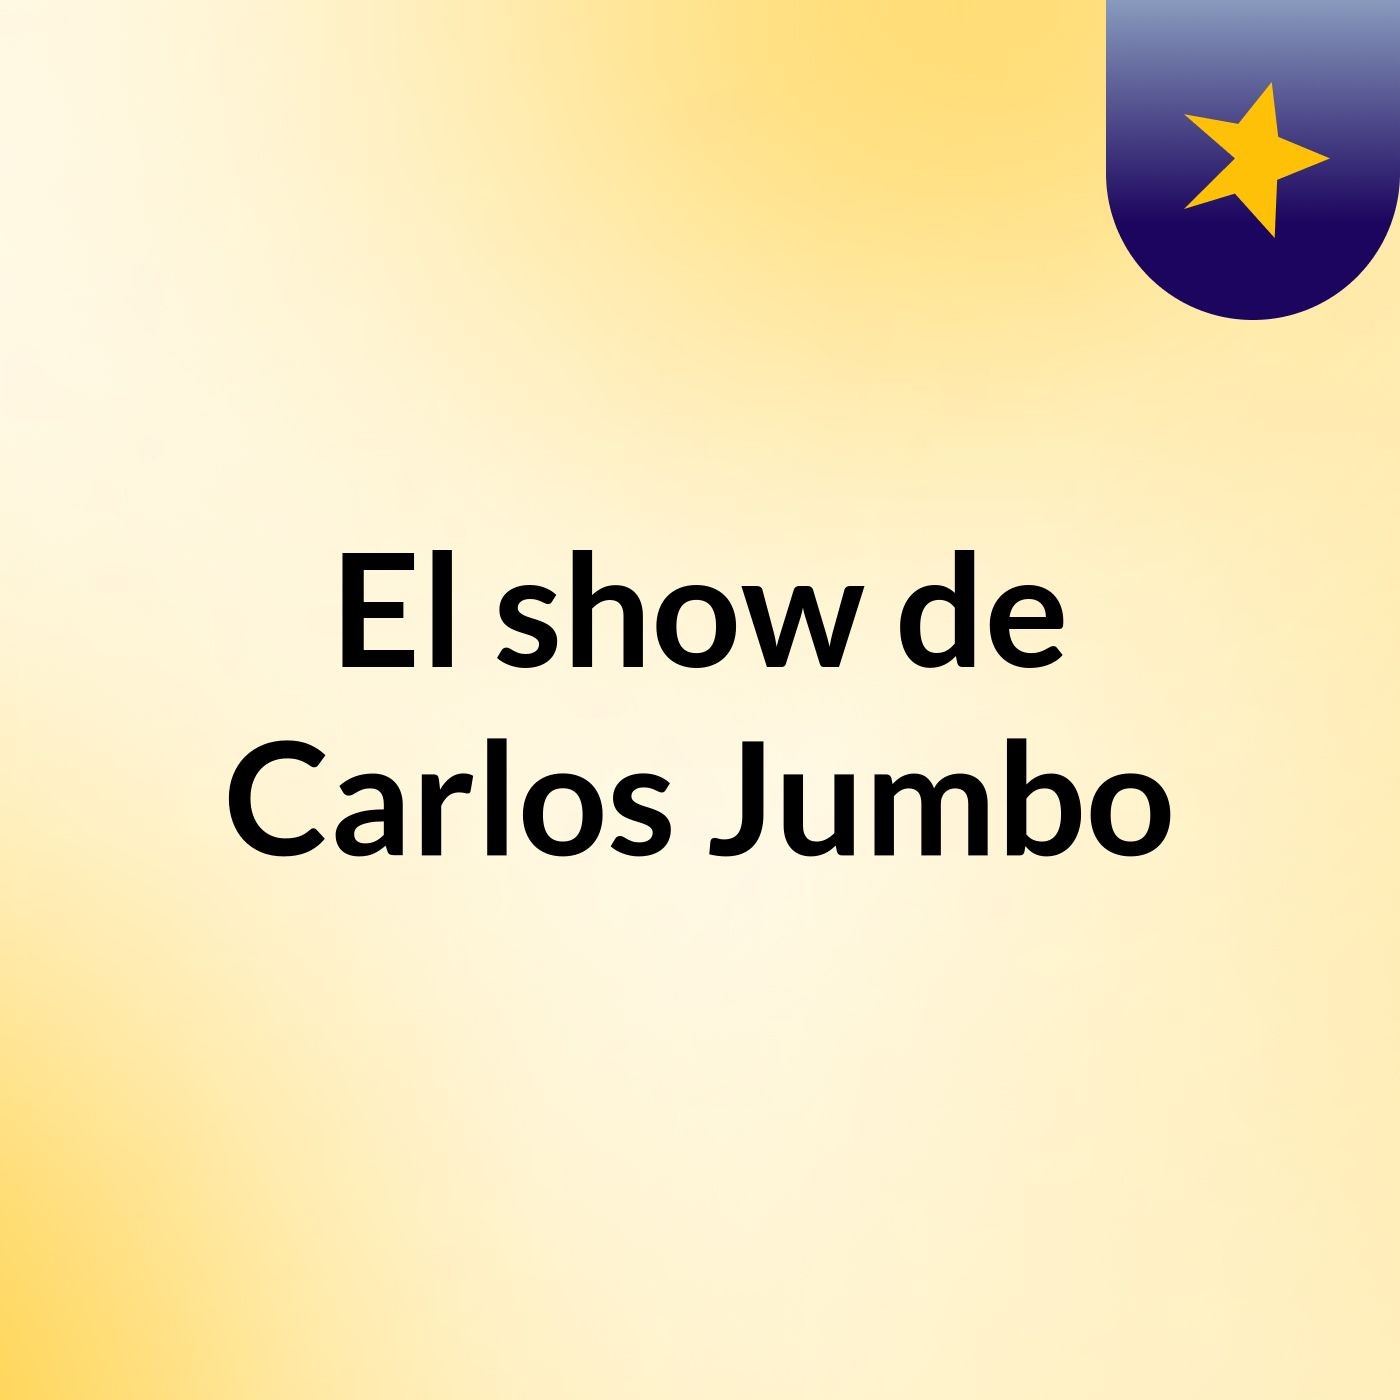 El show de Carlos Jumbo